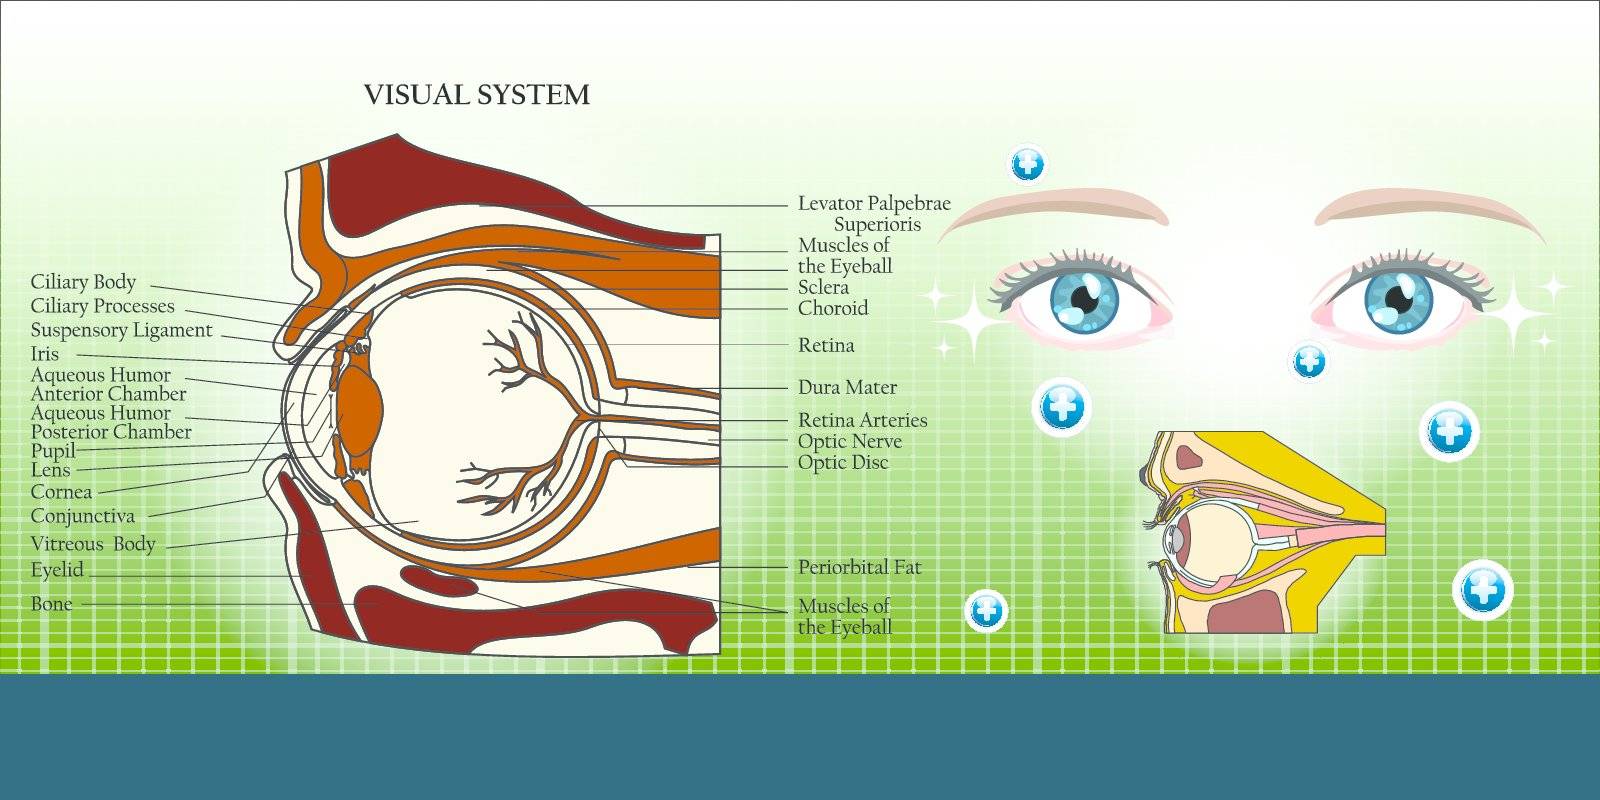 Visual system and eye anatomy illustration background by nirots